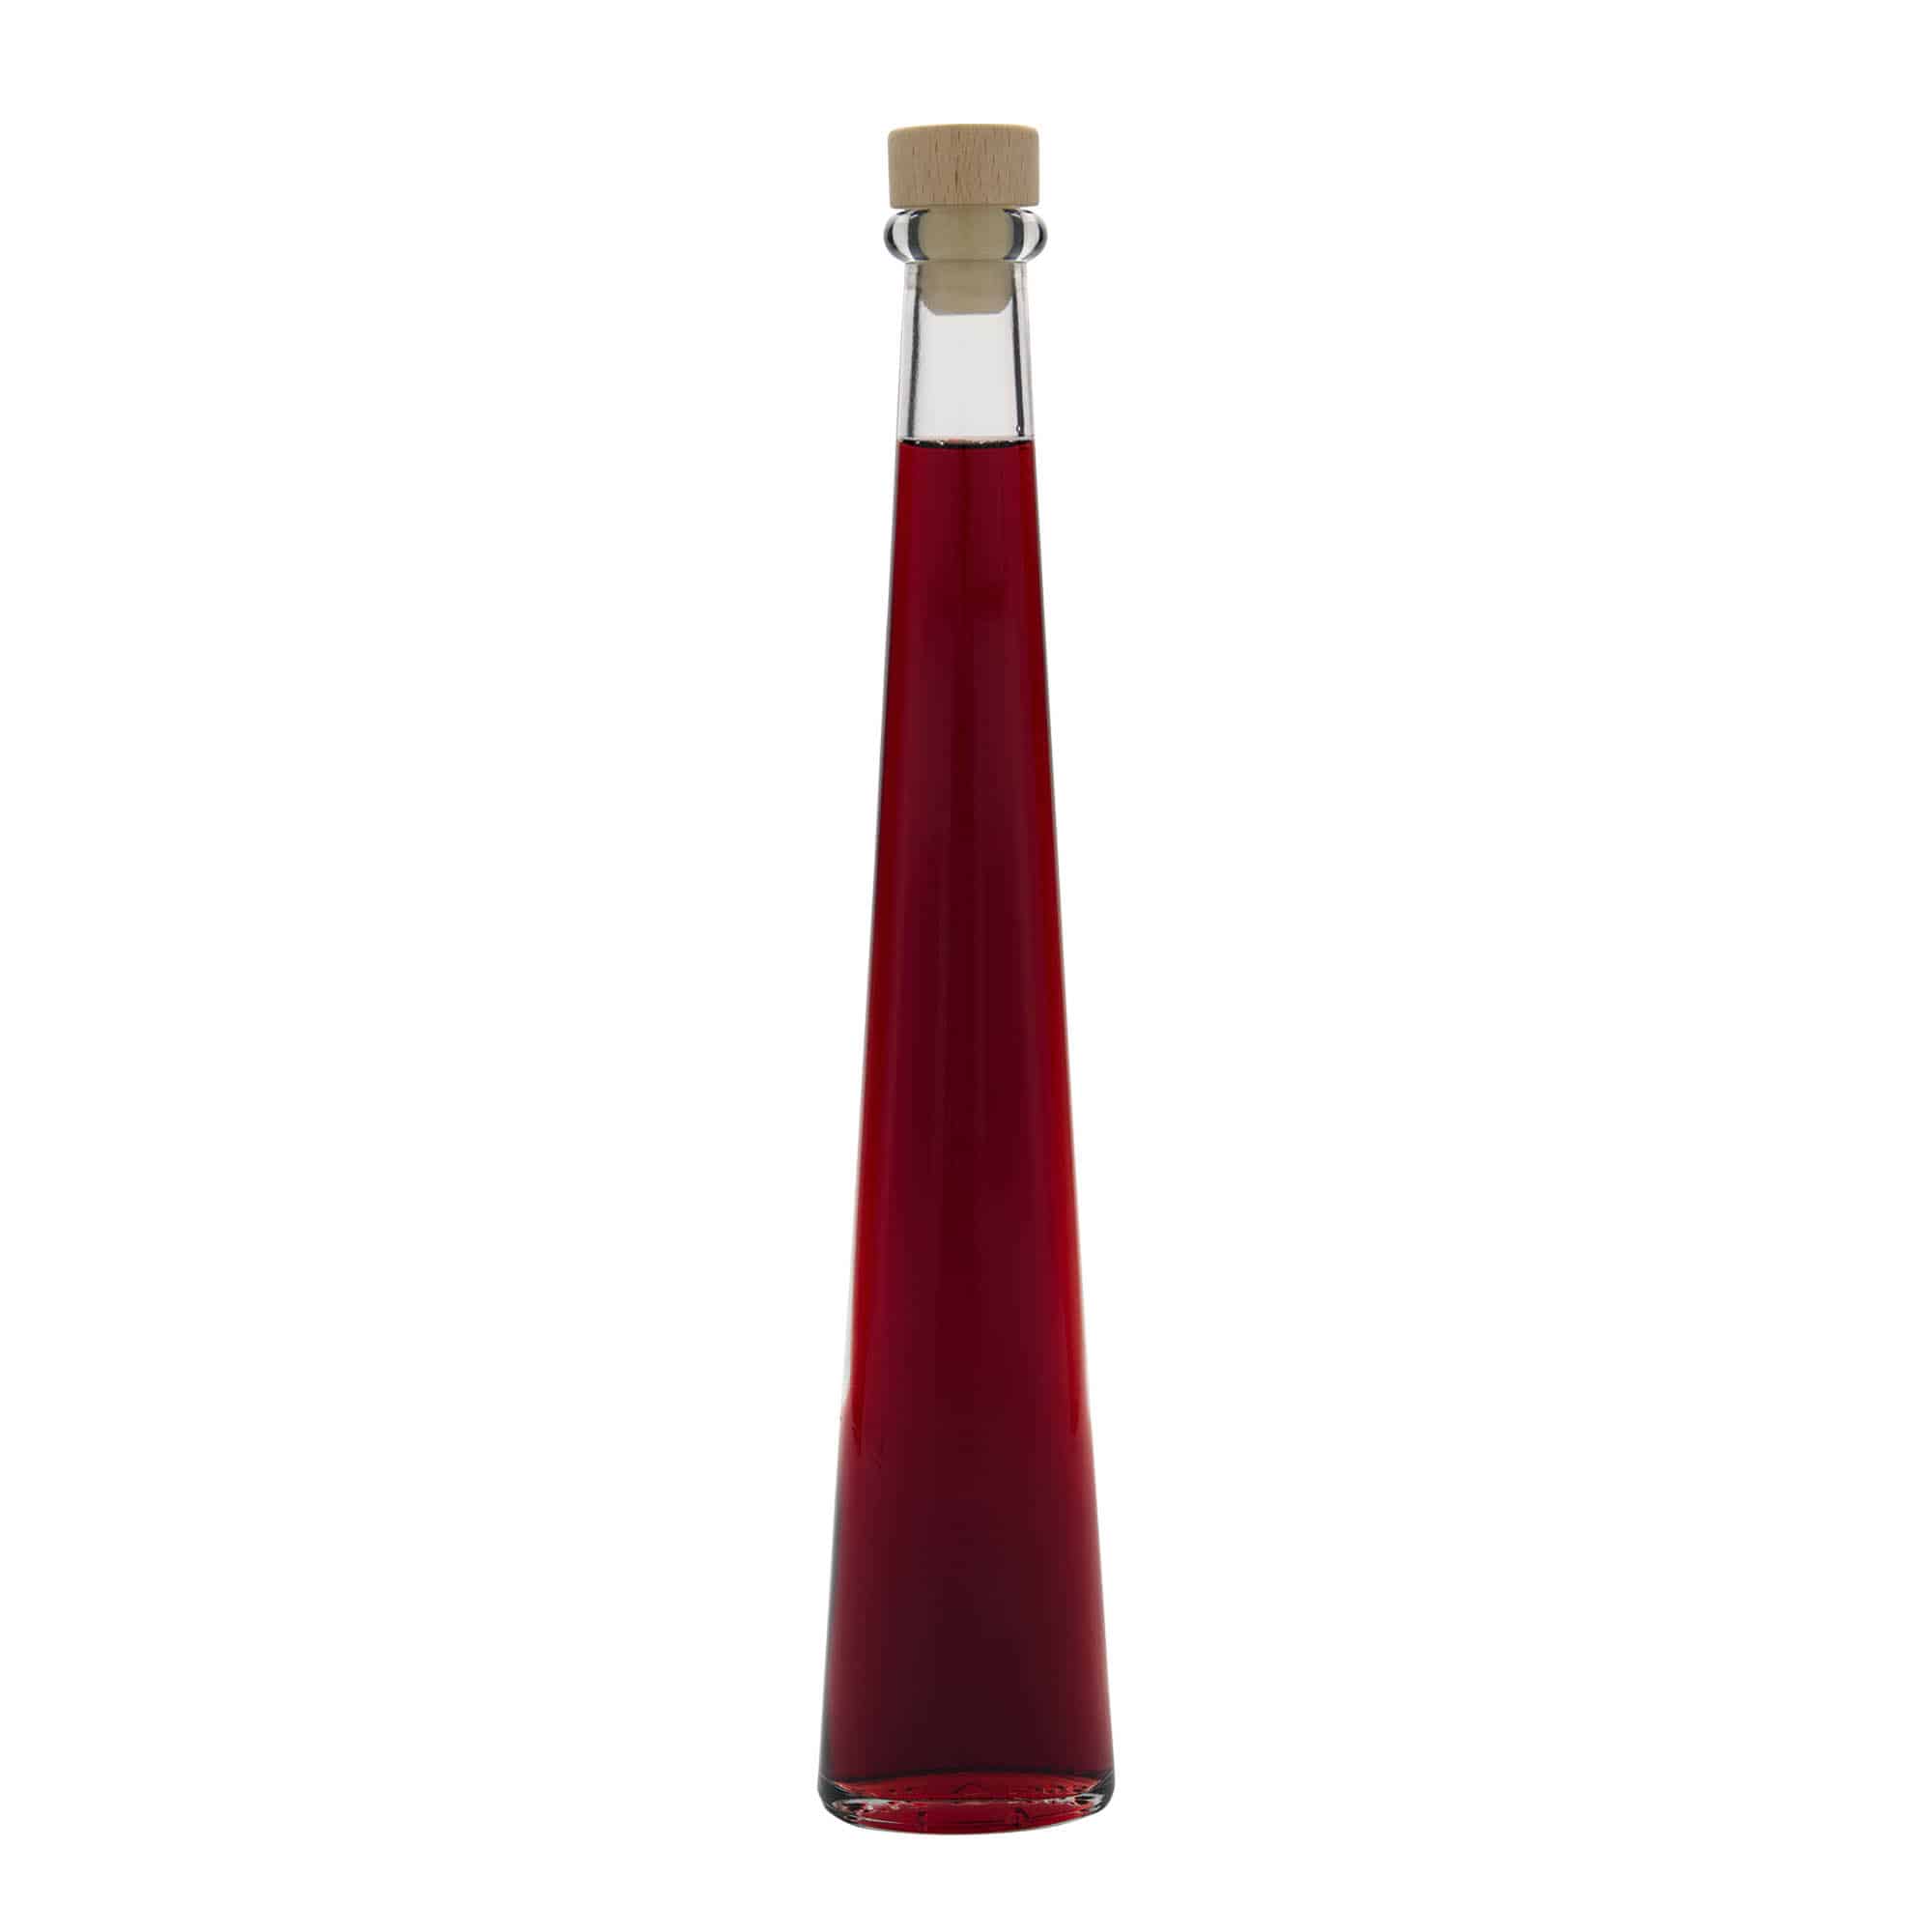 200 ml glass bottle 'Dama Ovale', oval, closure: cork